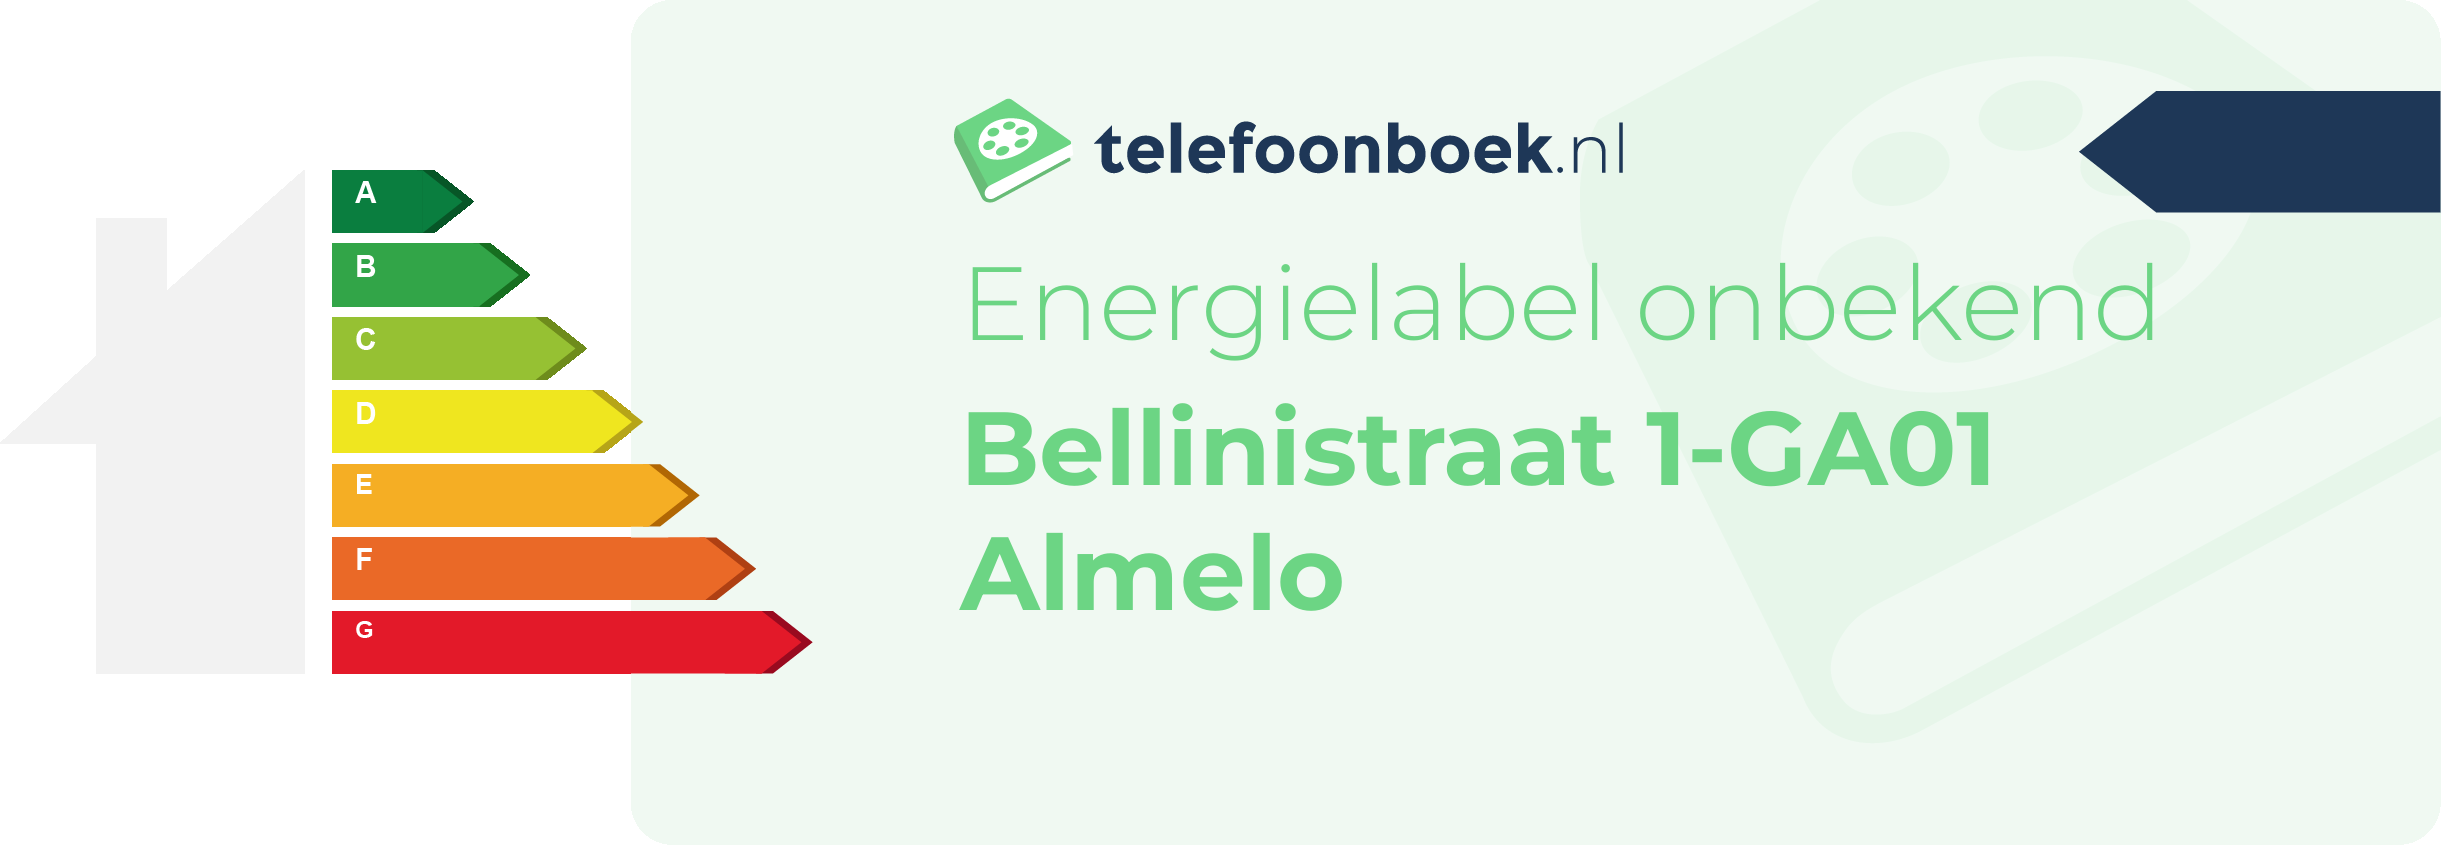 Energielabel Bellinistraat 1-GA01 Almelo